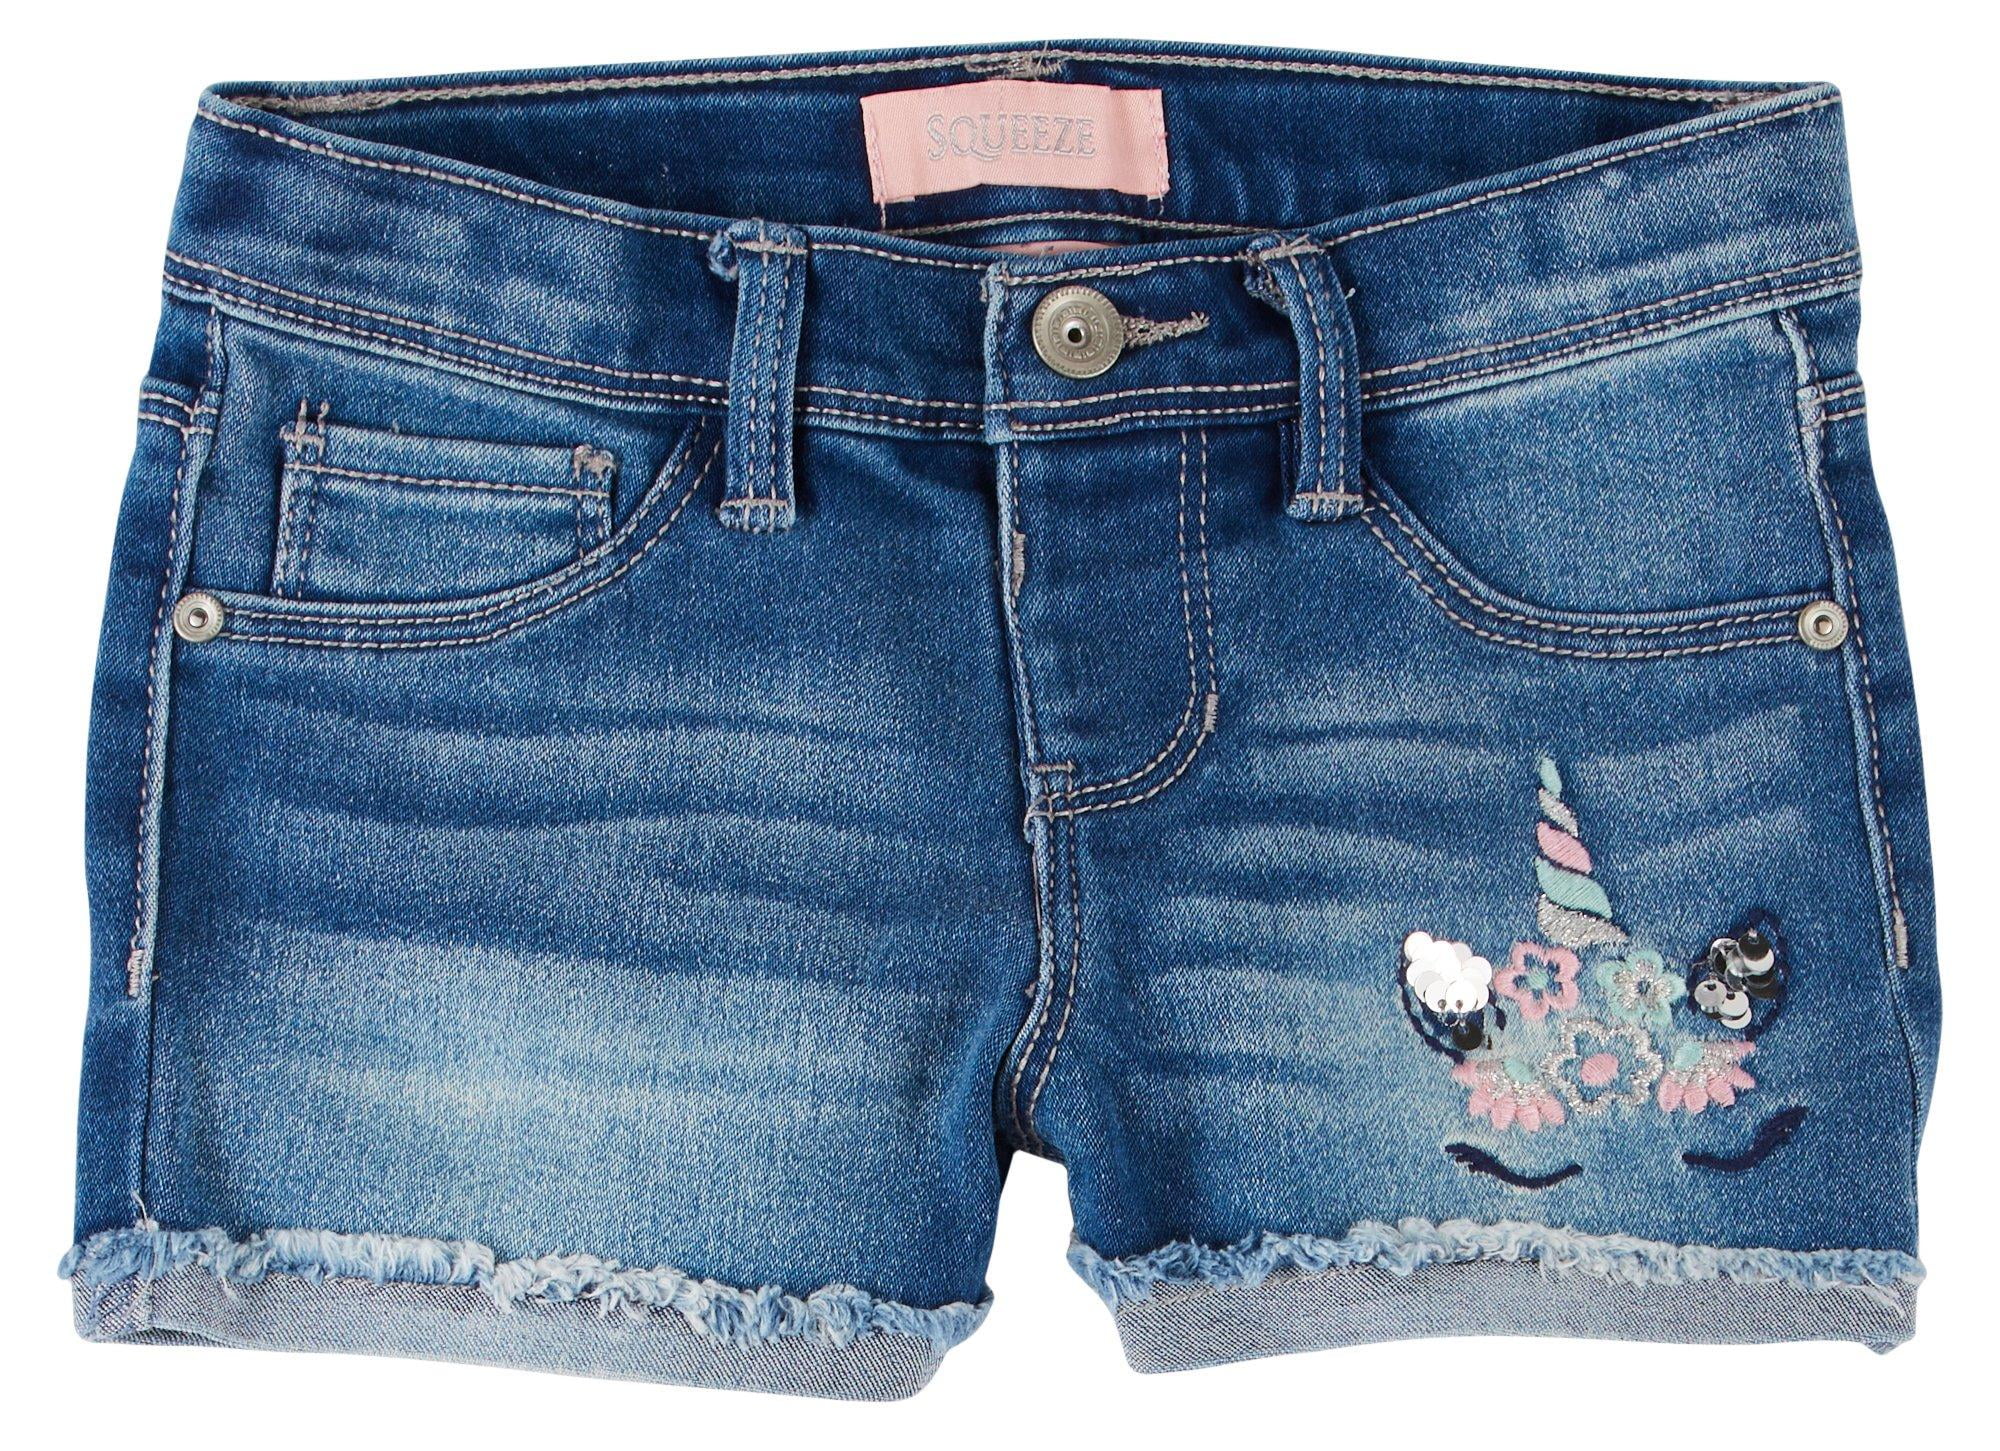 Catimini CATIMINI Girls faded pale blue striped & embroidered denim jean shorts 5,7 yrs 